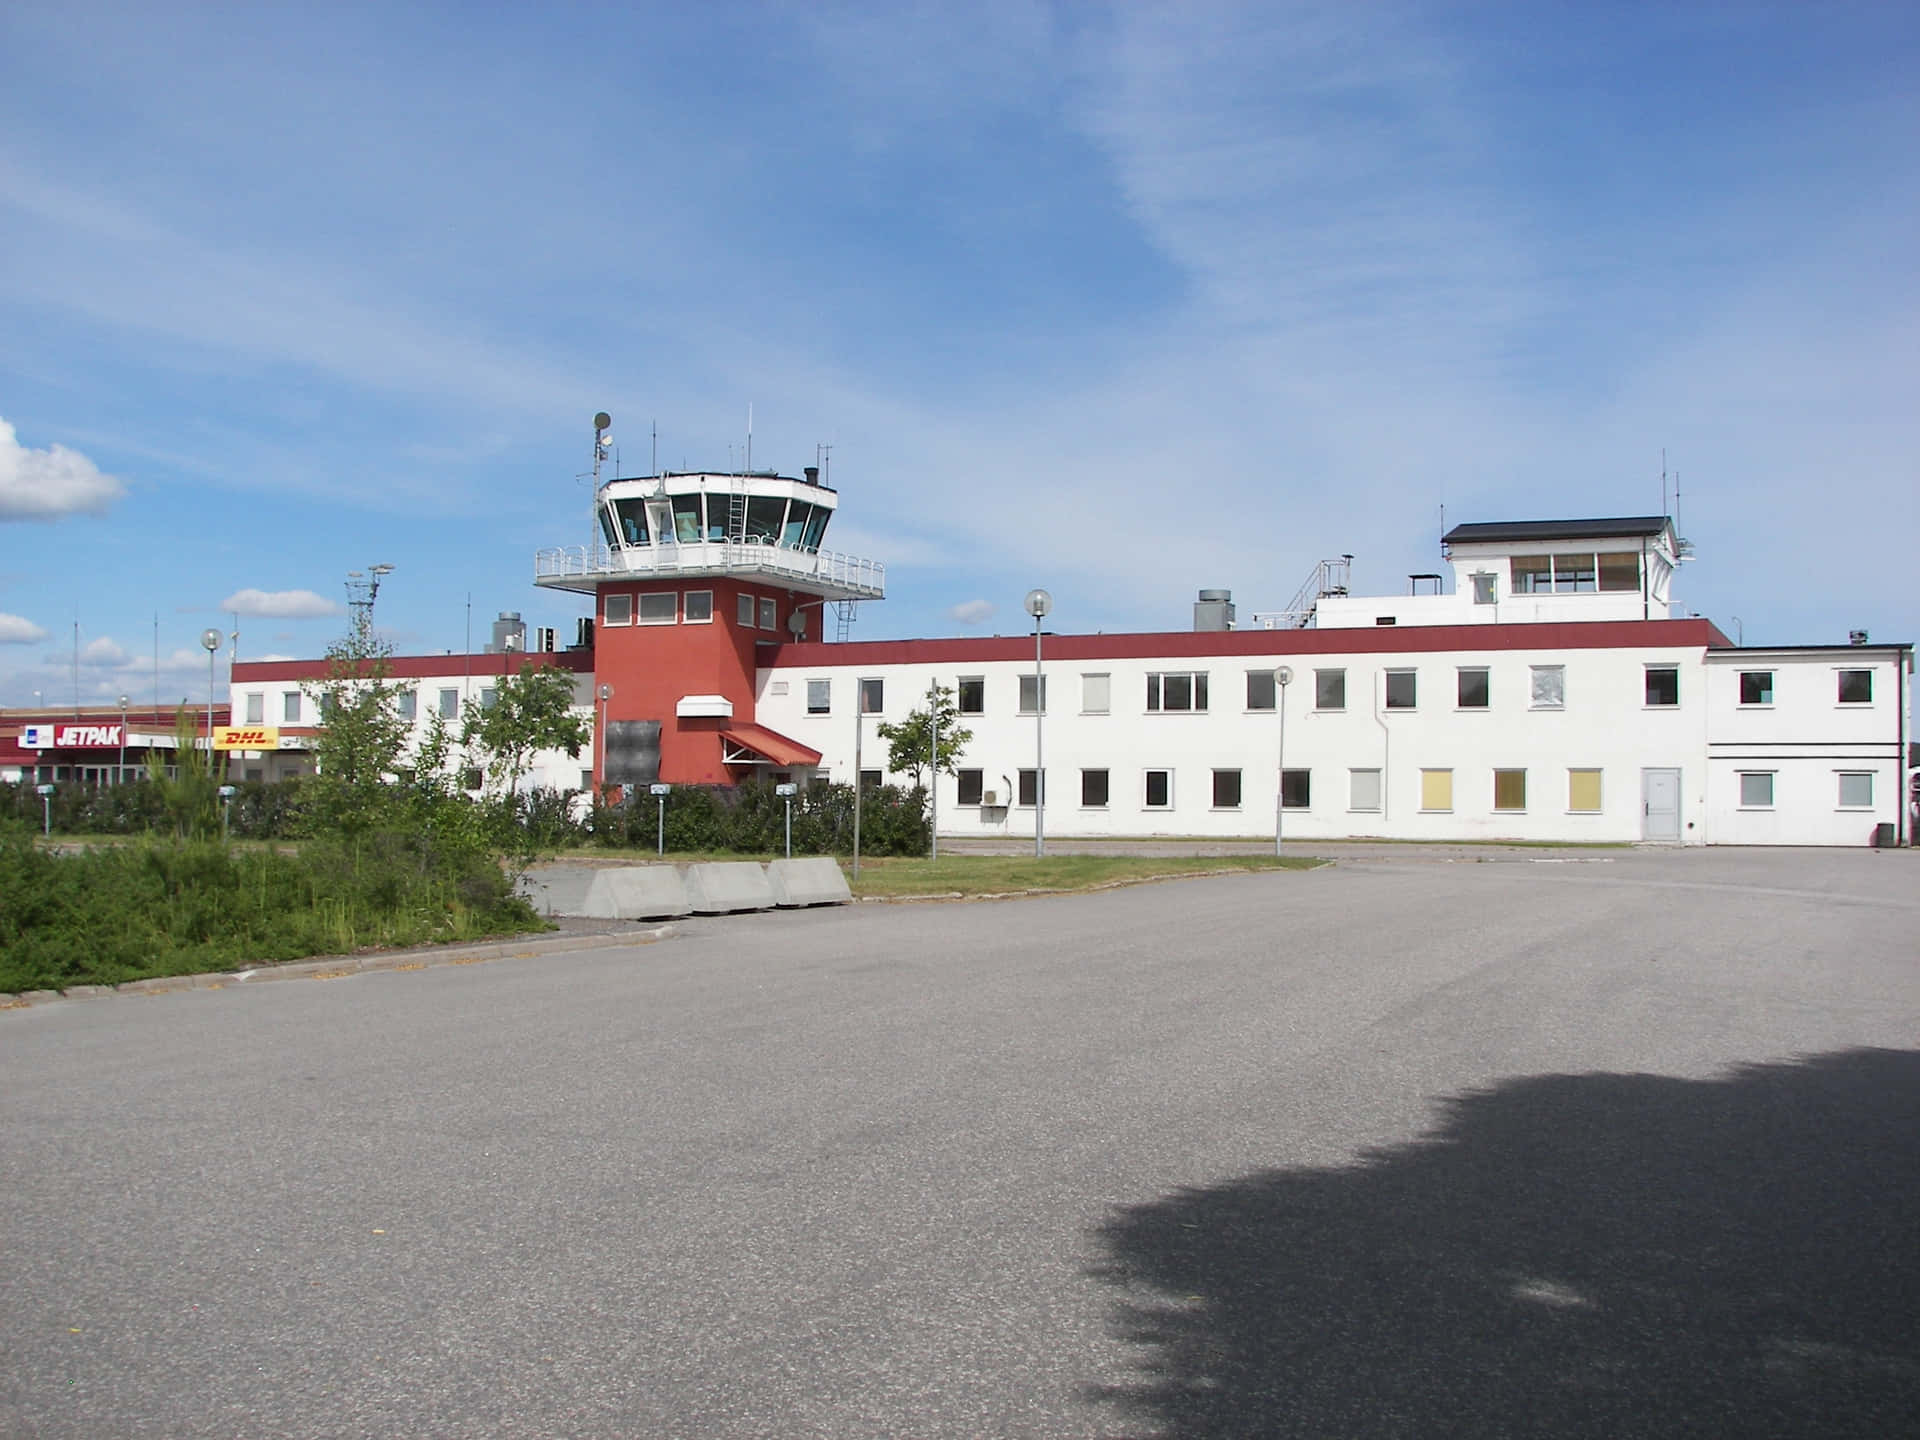 Sundsvall Airport Control Tower Wallpaper